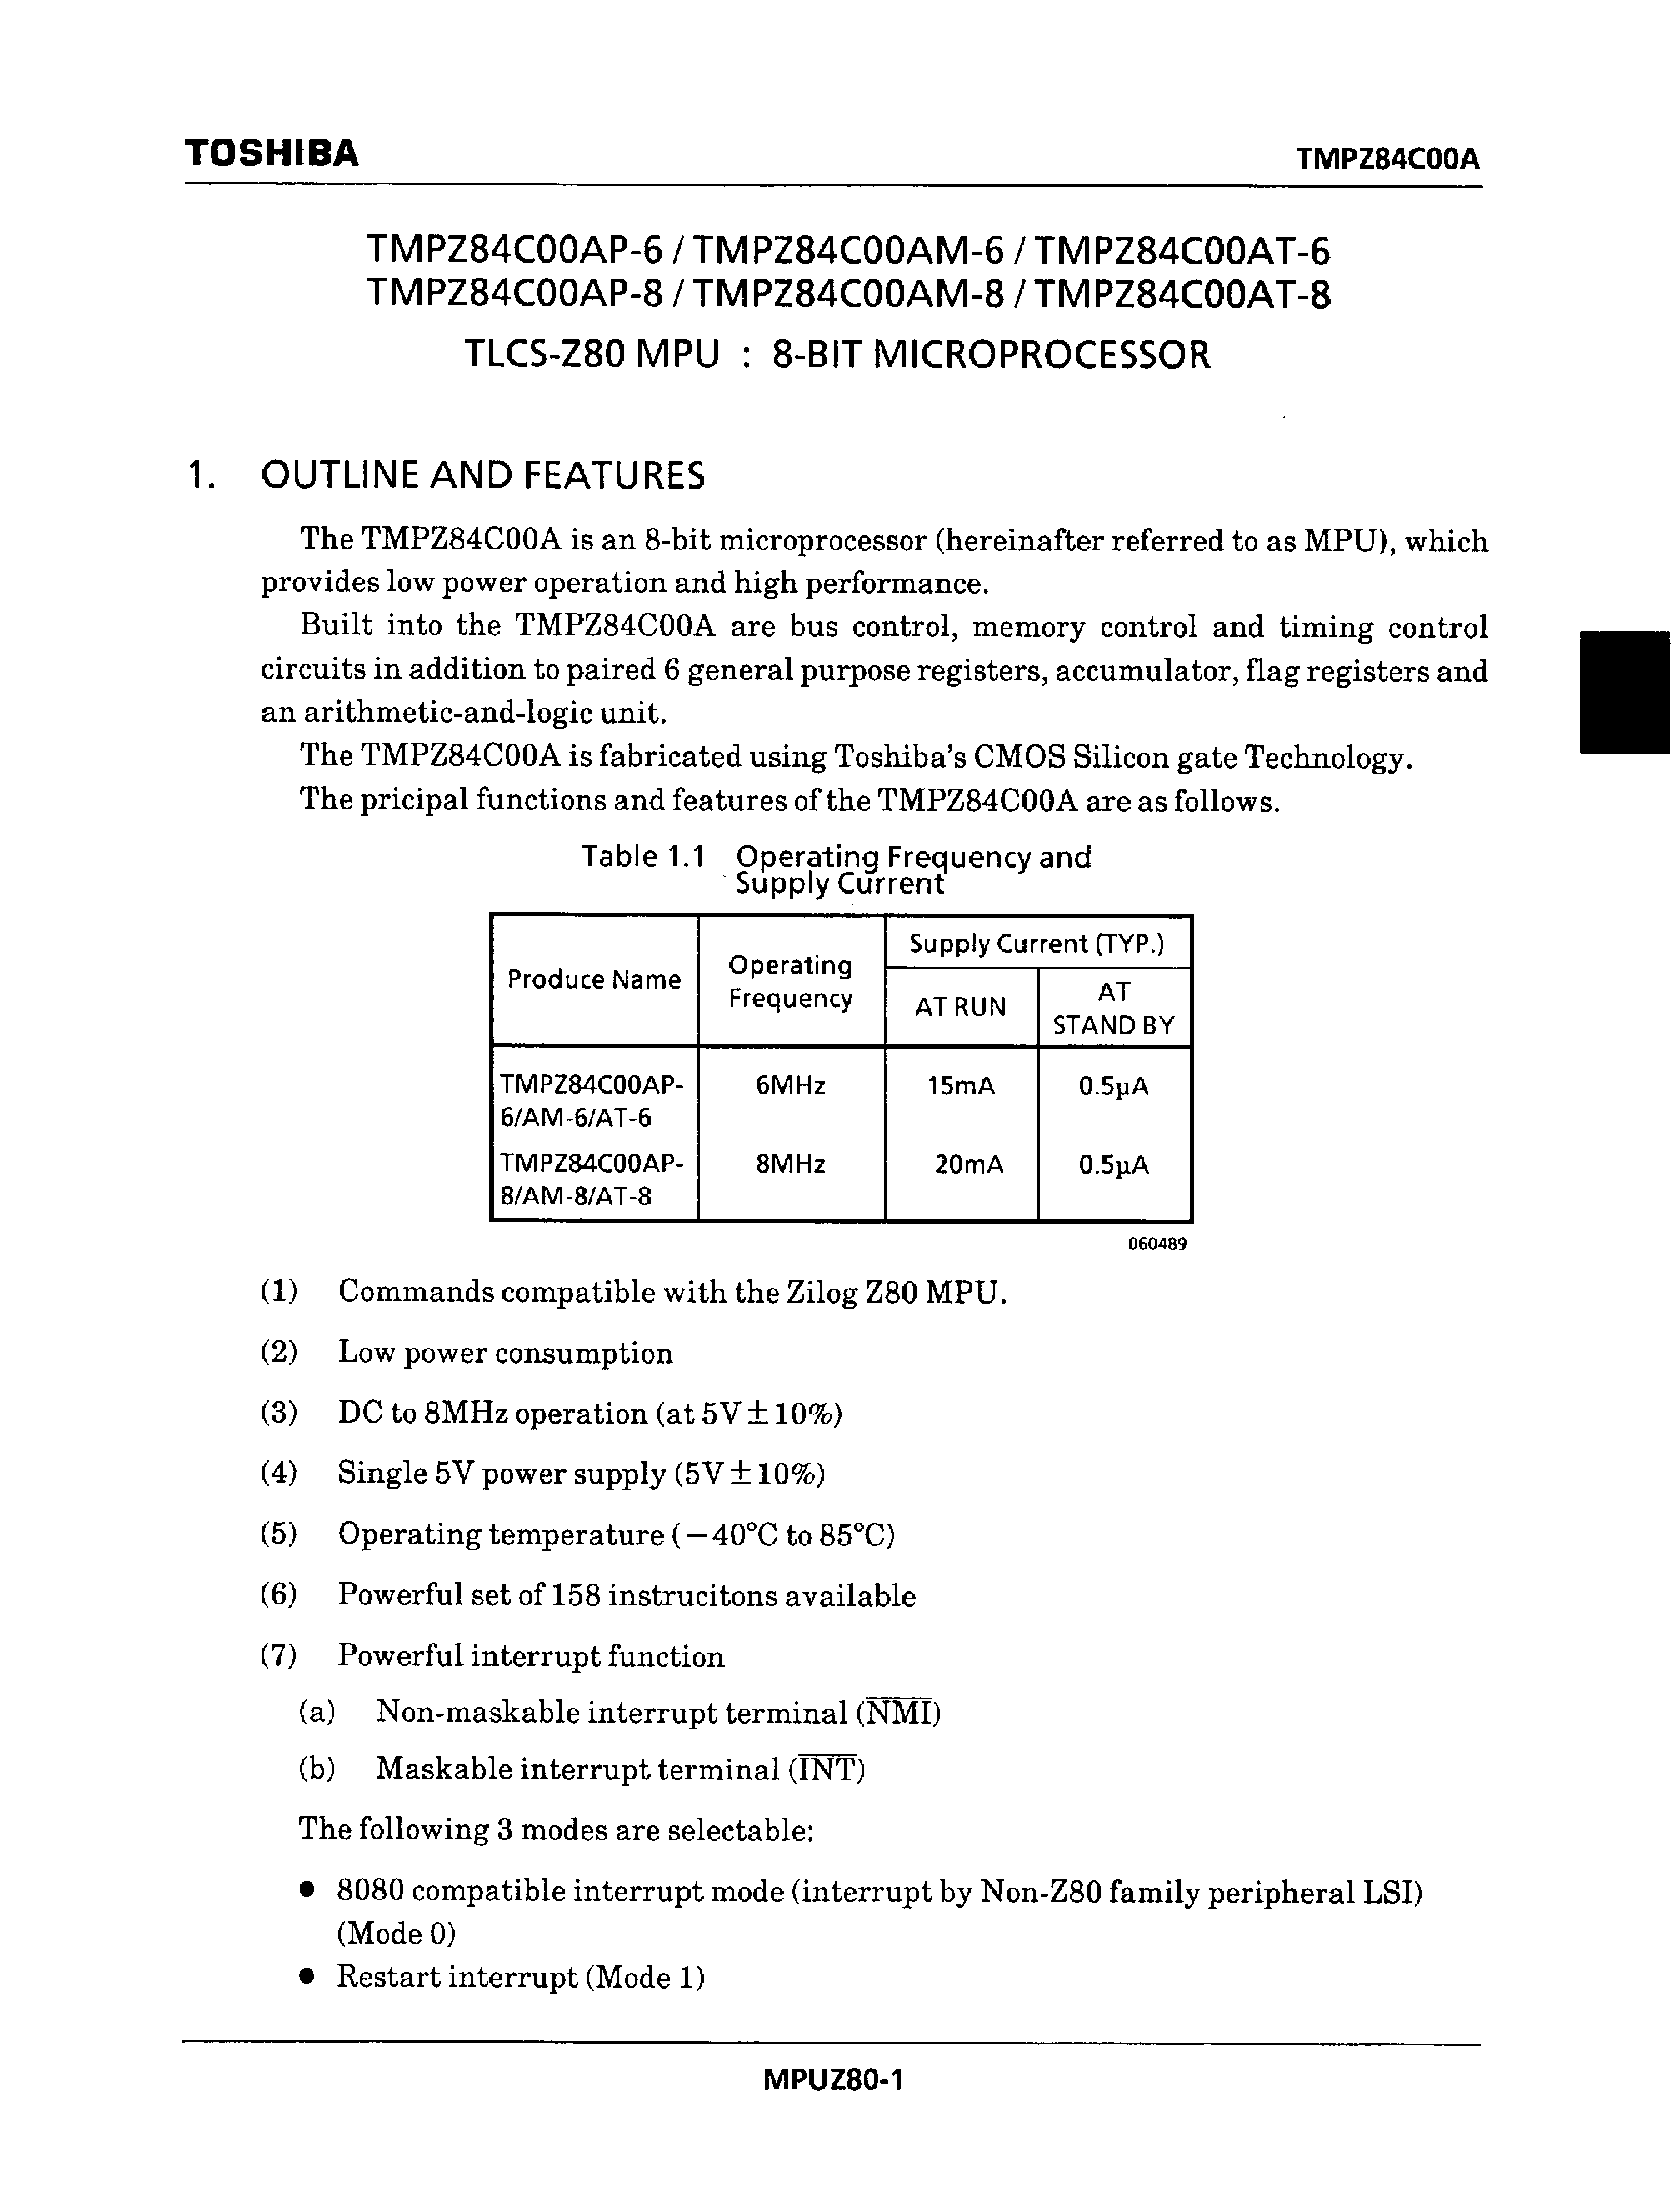 Datasheet TMPZ84C00AP-8 - TLCS-Z80 MPU : 8-BIT MICROPROCESSOR page 1